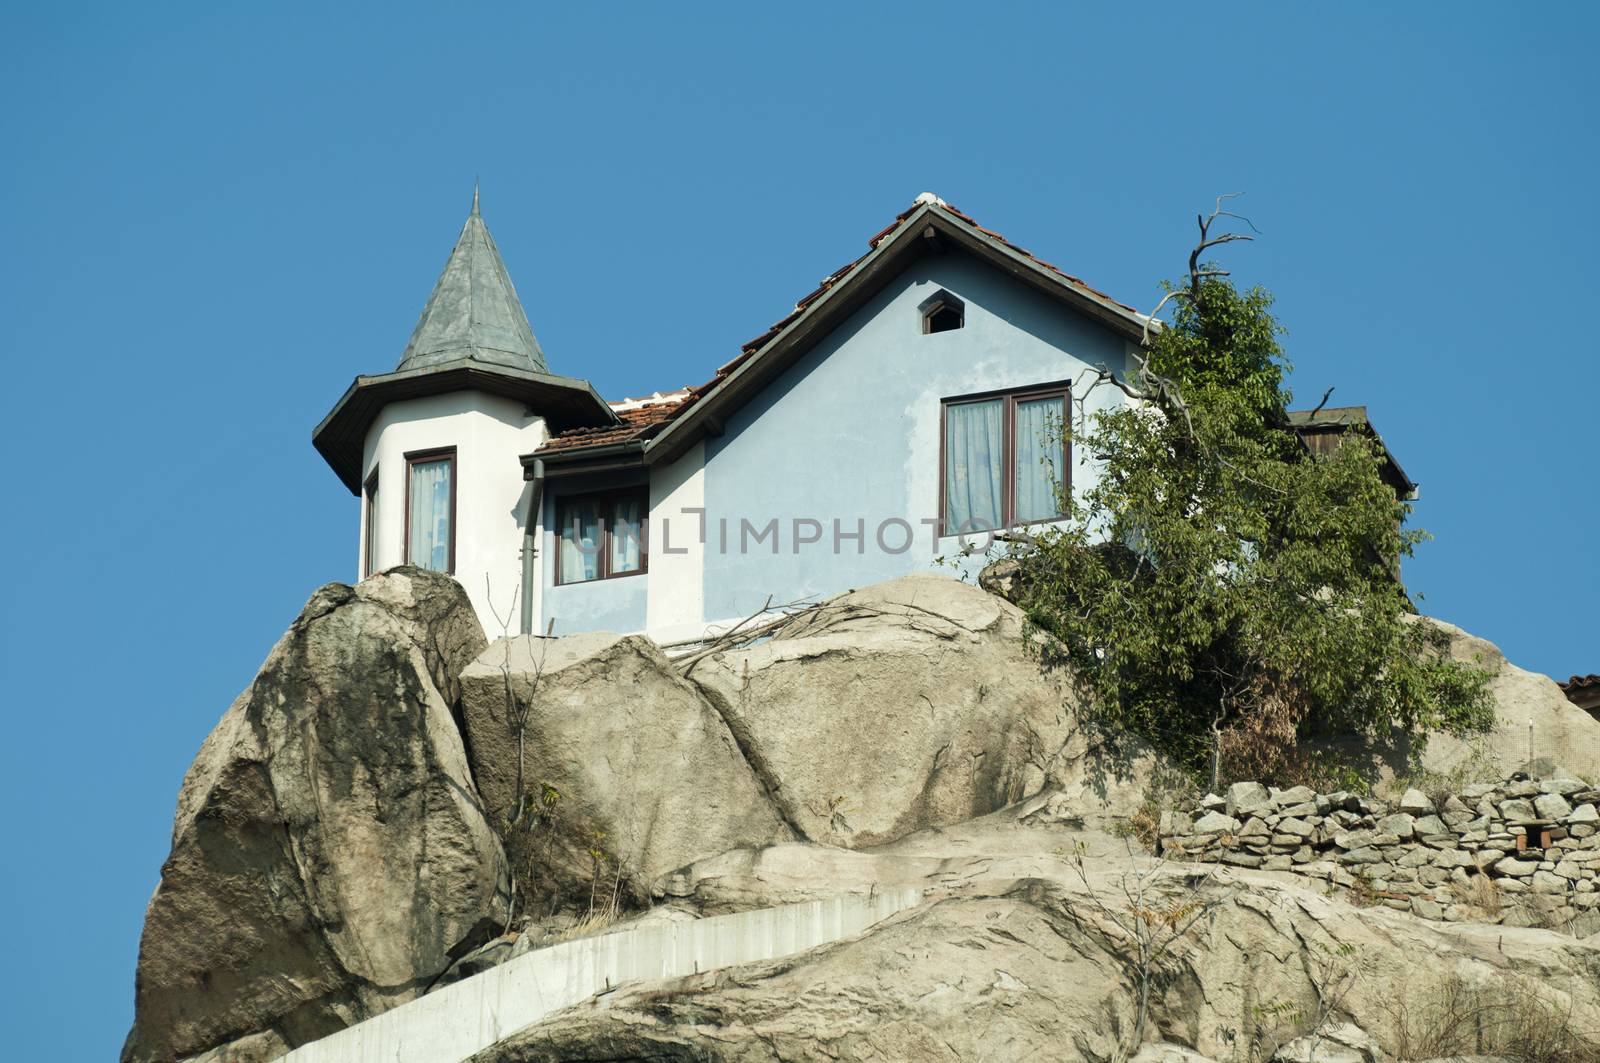 House on top of the mountain by deyan_georgiev